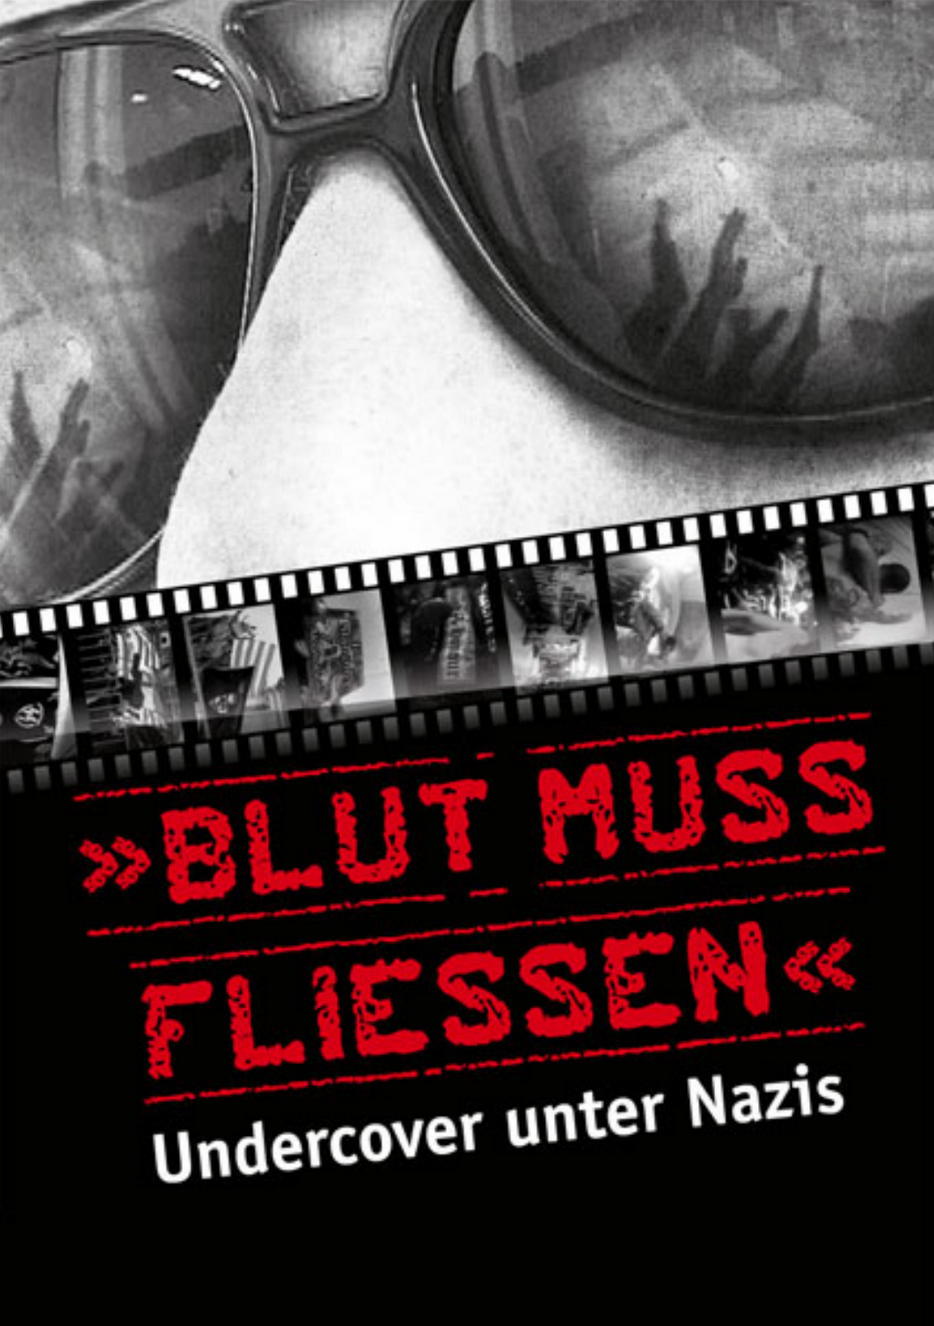 Filmvorstellung: „Blut muss fließen“ – Undercover unter Nazis